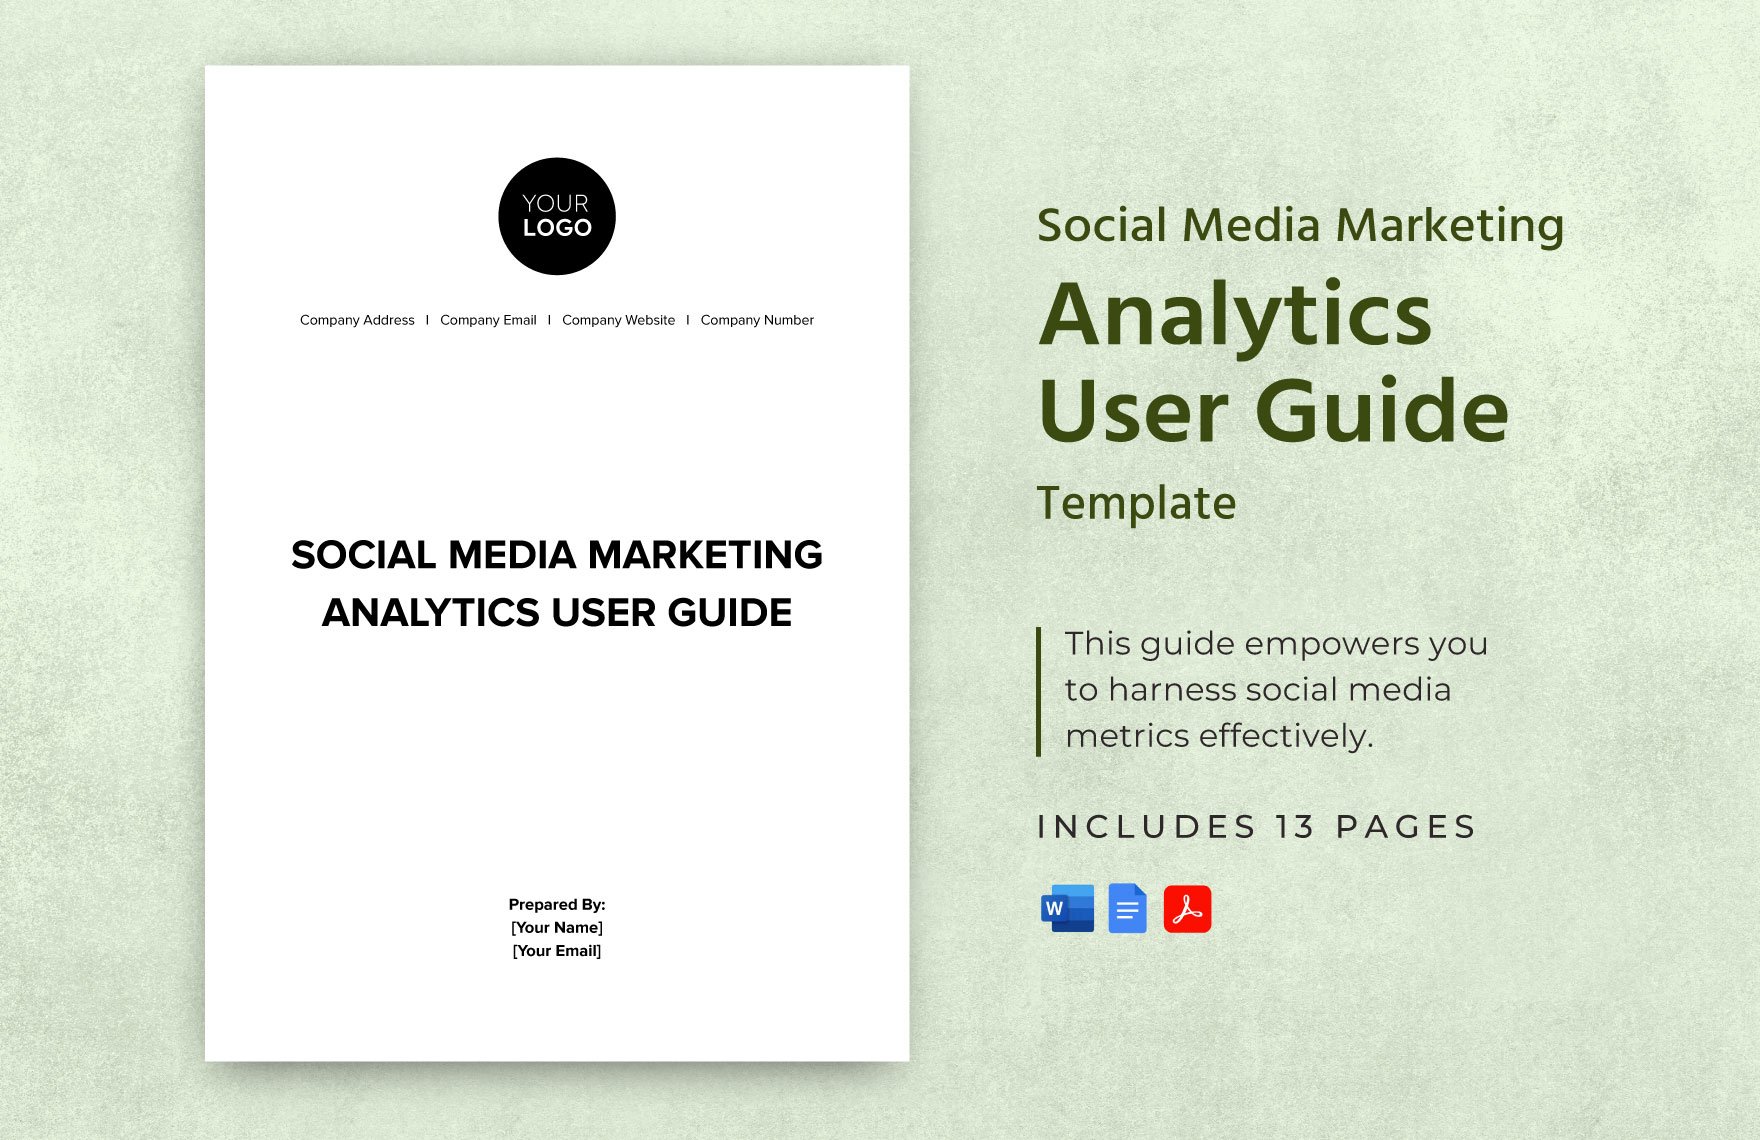 Social Media Marketing Analytics User Guide Template in Word, Google Docs, PDF